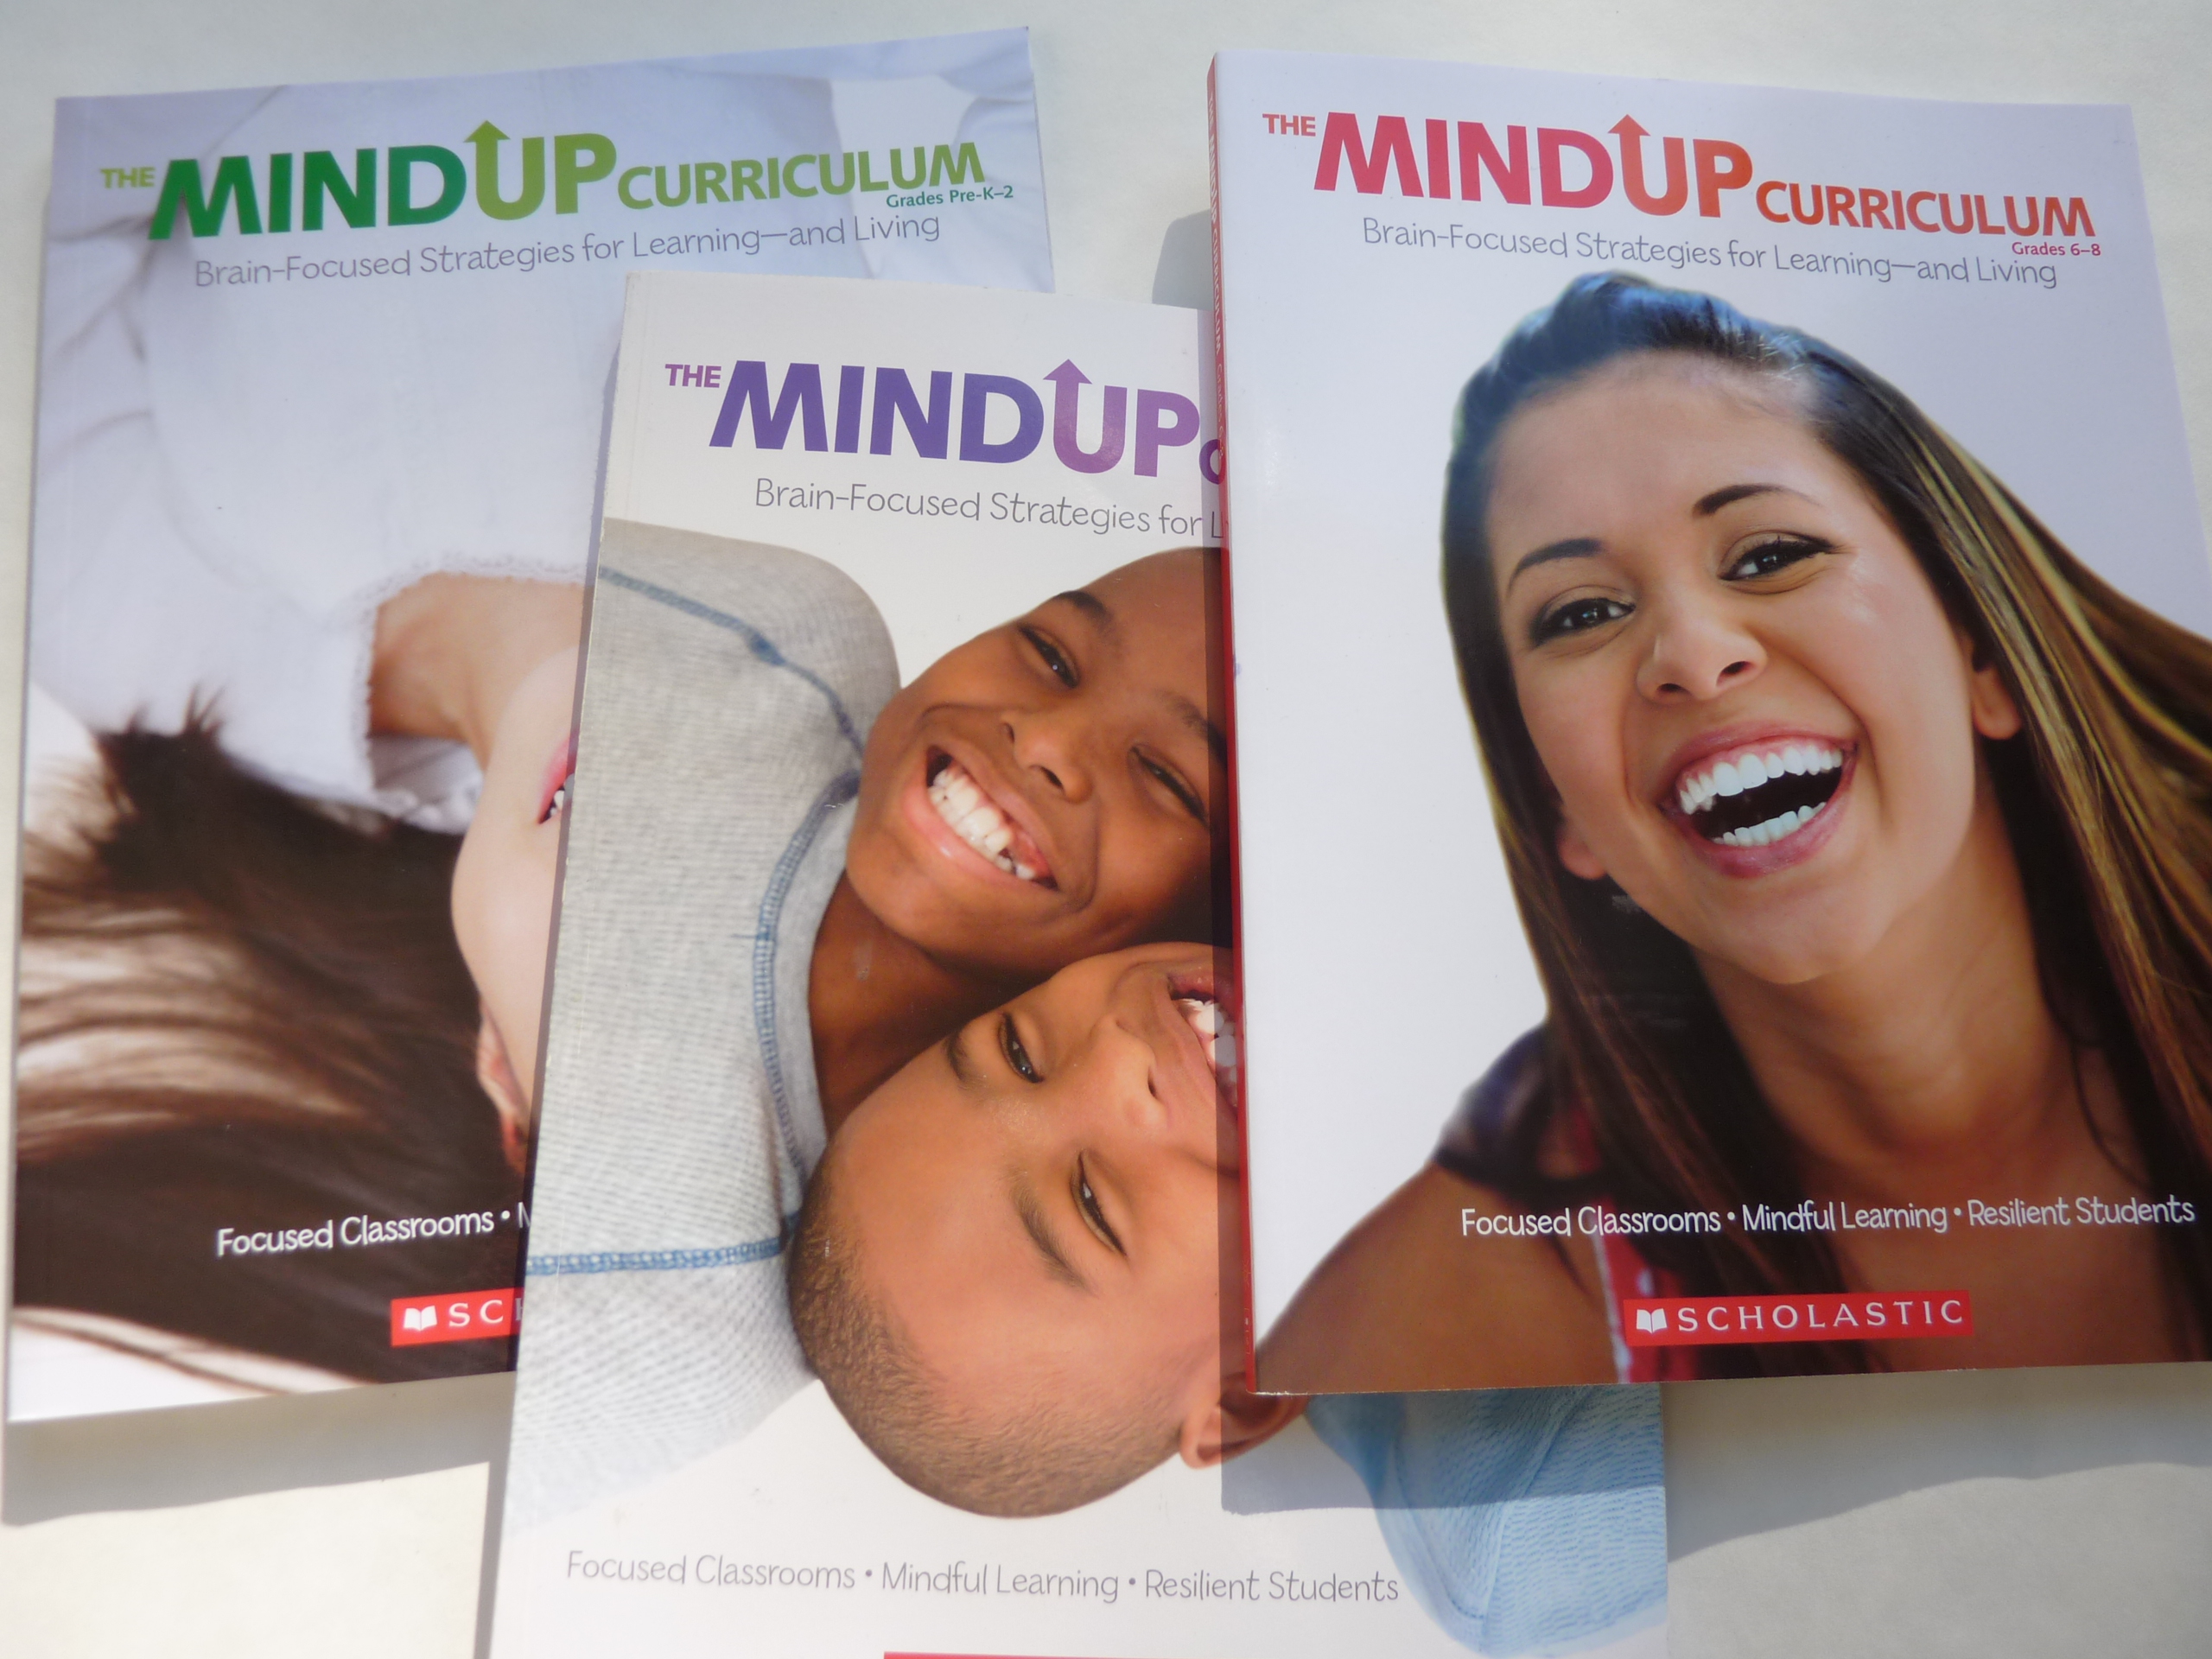 mindup foundation